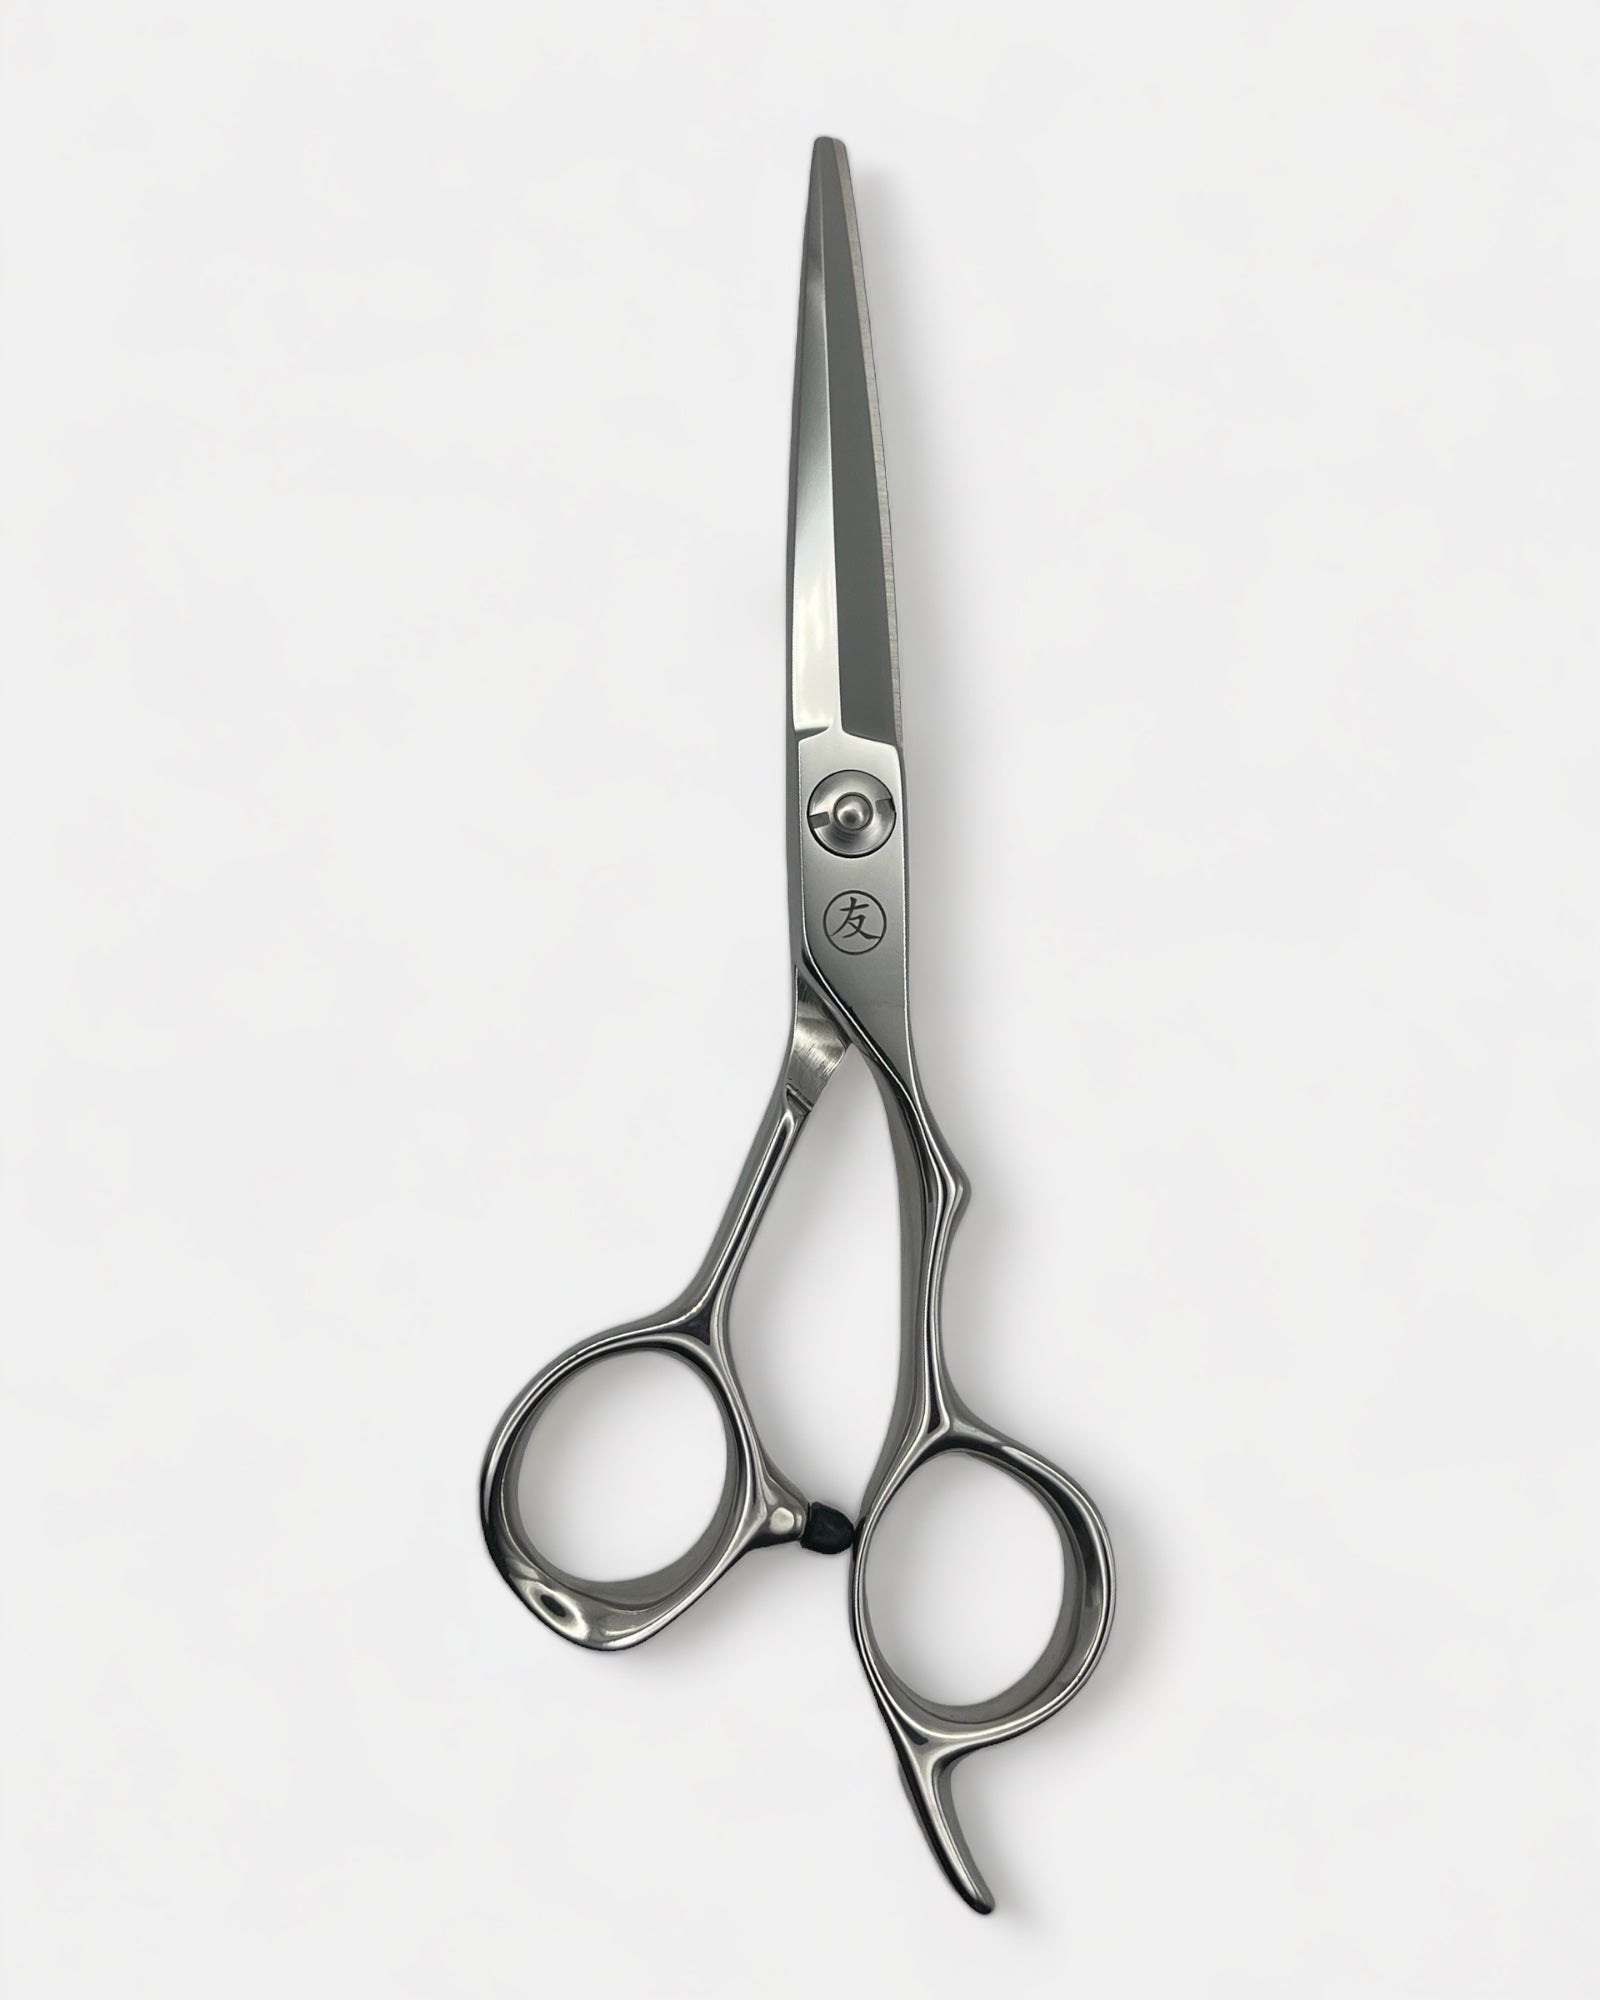 Vp Professional Hairdresser Scissors Hair Cutting Tools Barber